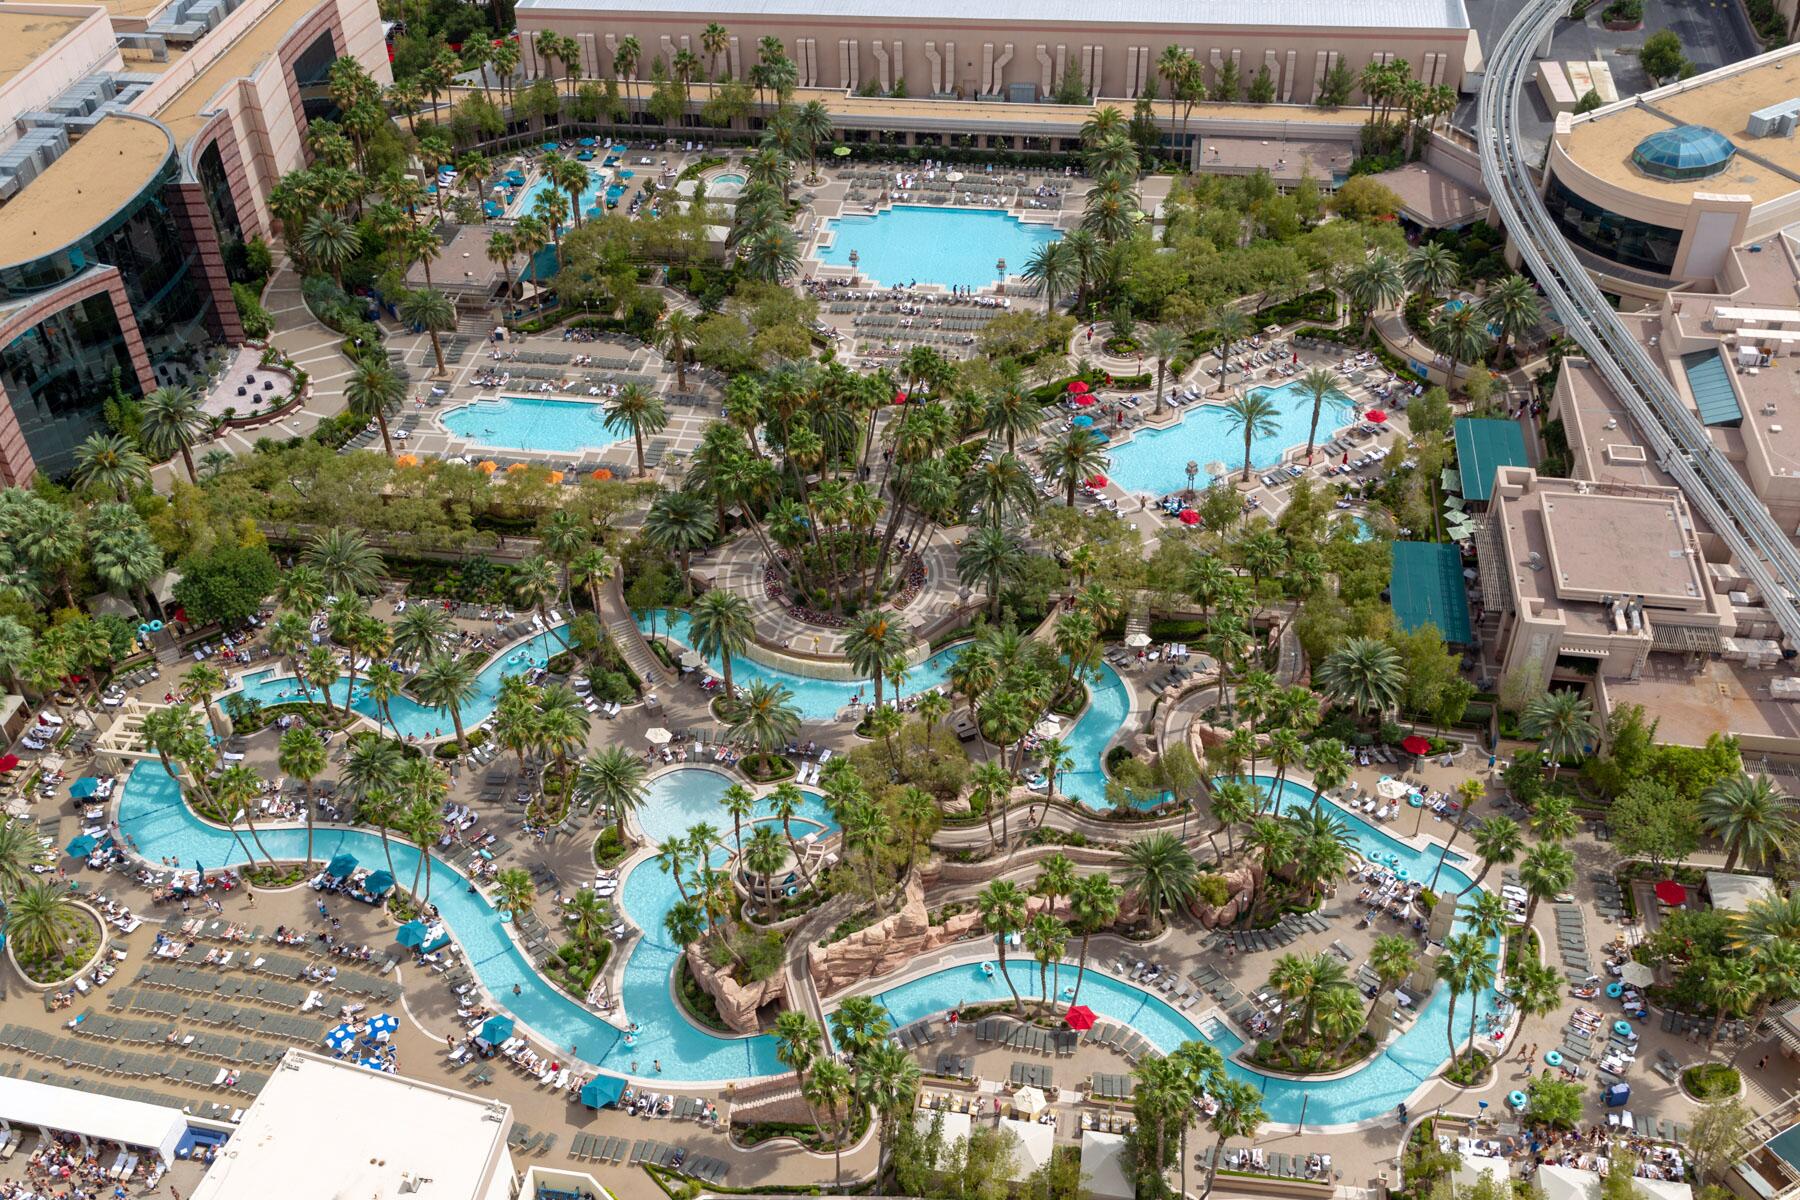 15 Best Pools in Las Vegas & Hotels with Pools